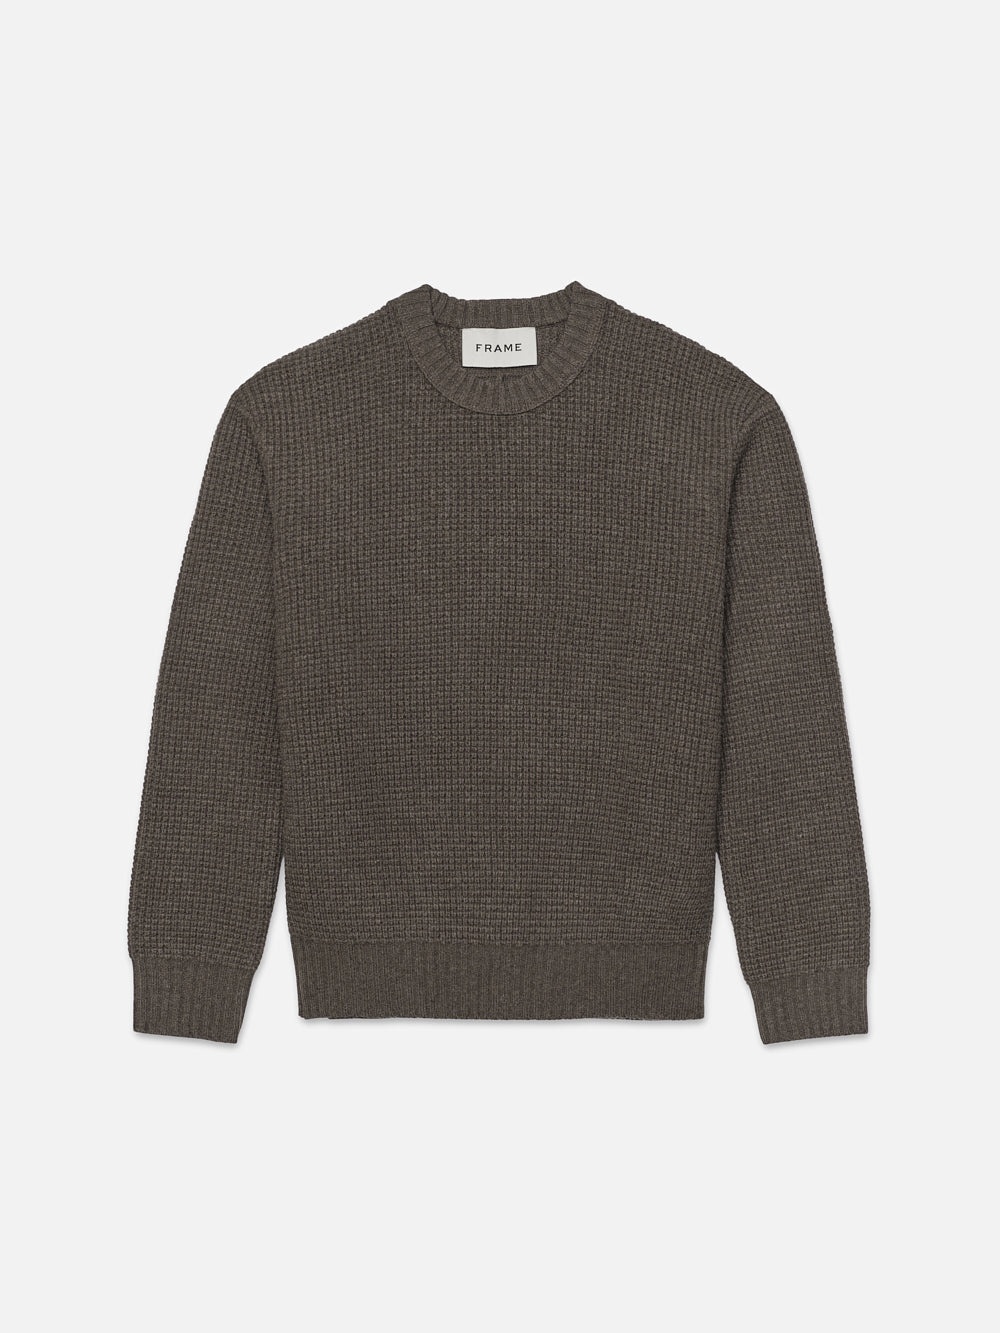 Wool Crewneck Sweater in Mole - 1